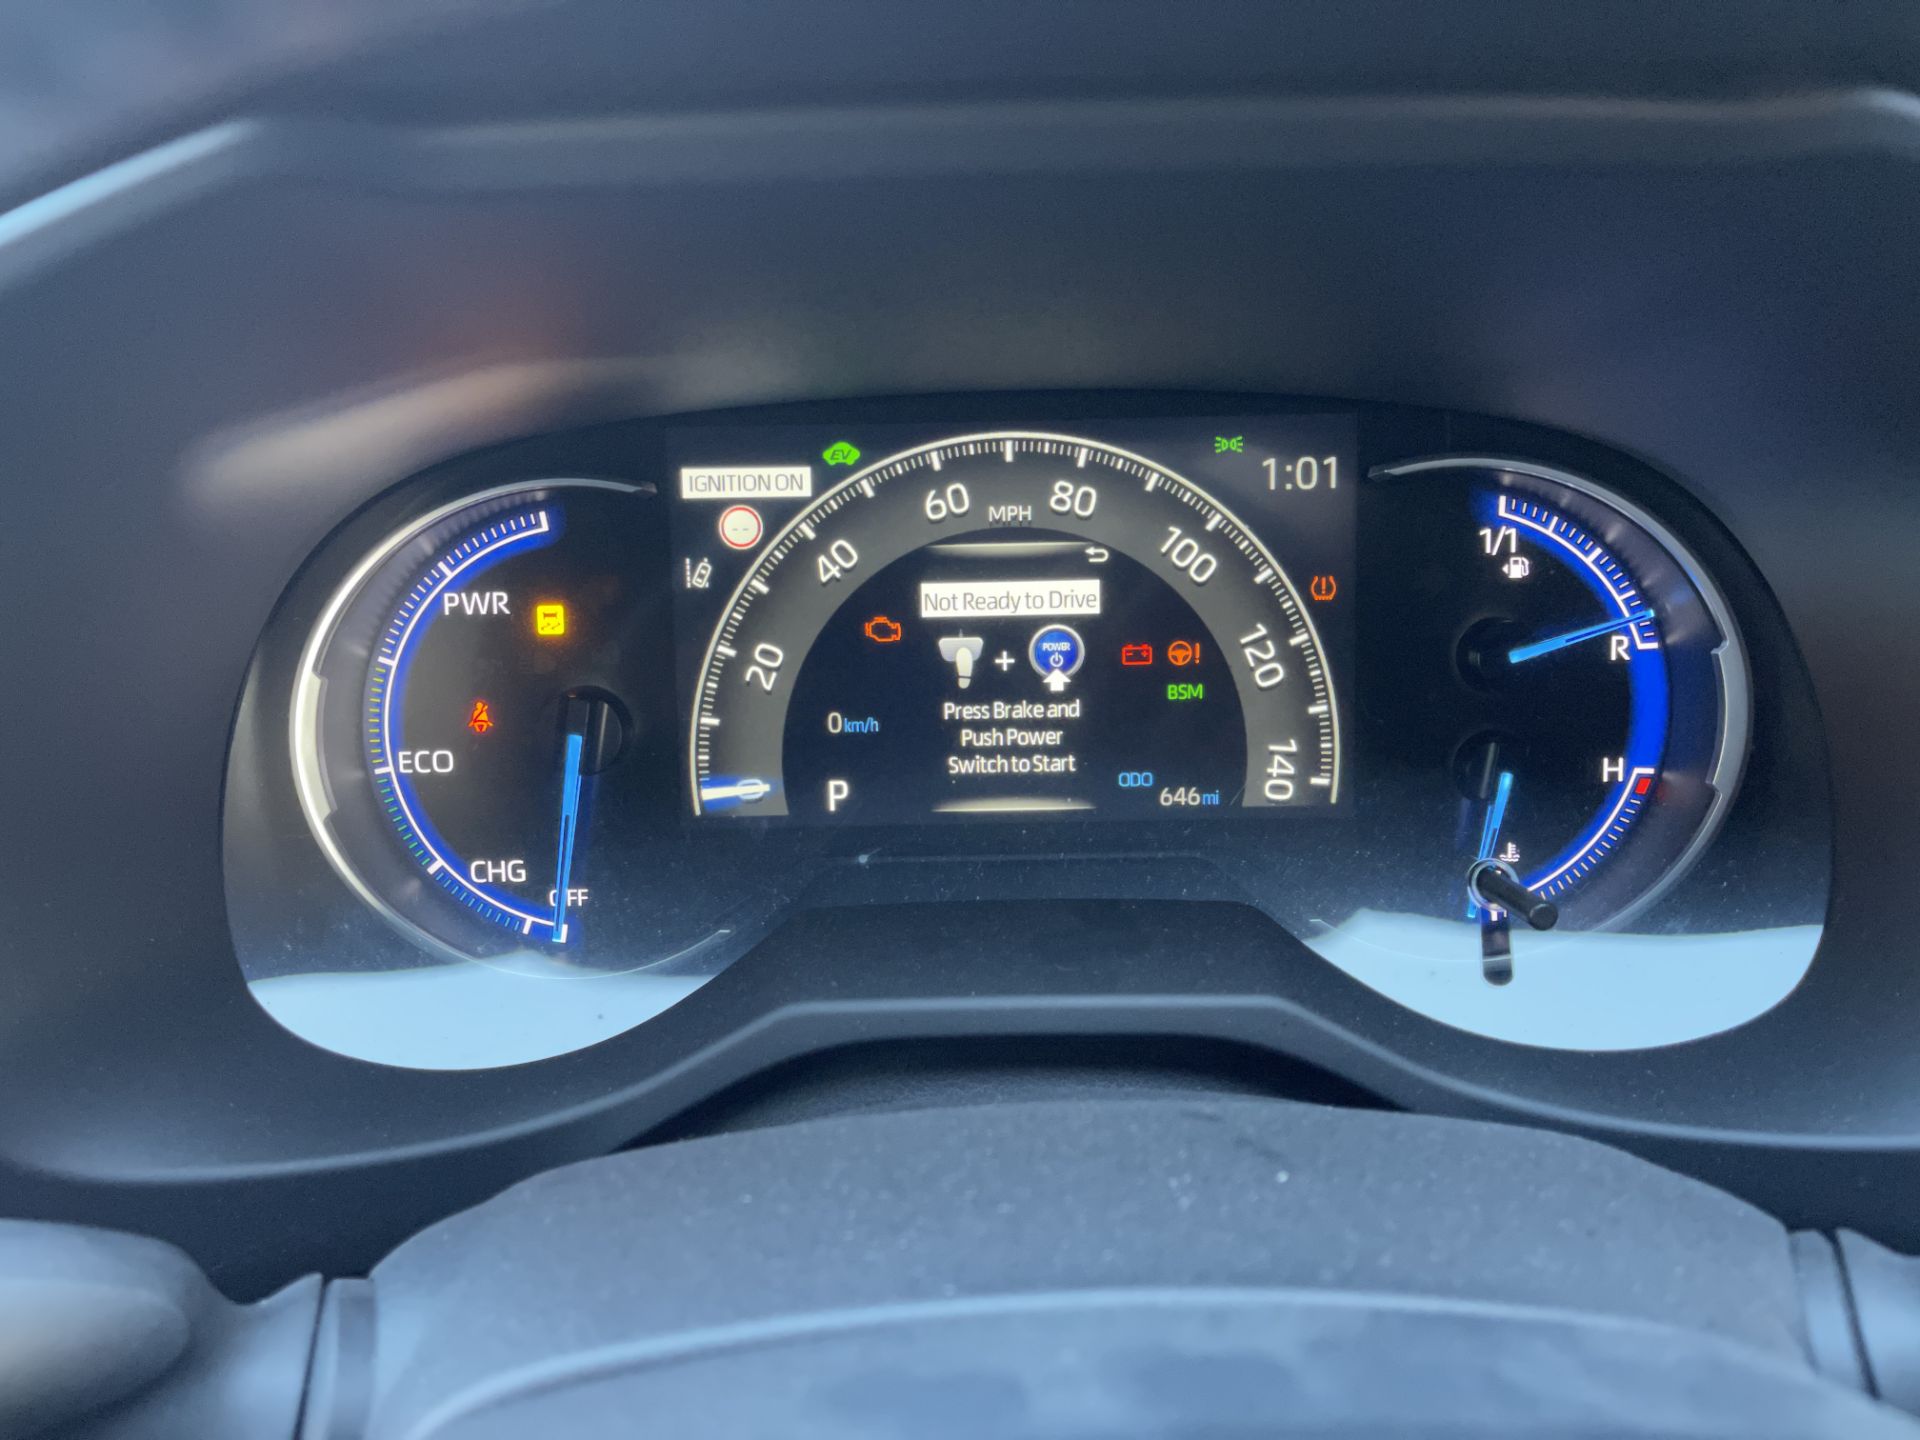 2019 - Toyota RAV 4 Dynamic HEV 4 x 2 CVT 2,487cc Petrol Hybrid Electric SUV, - Image 16 of 46